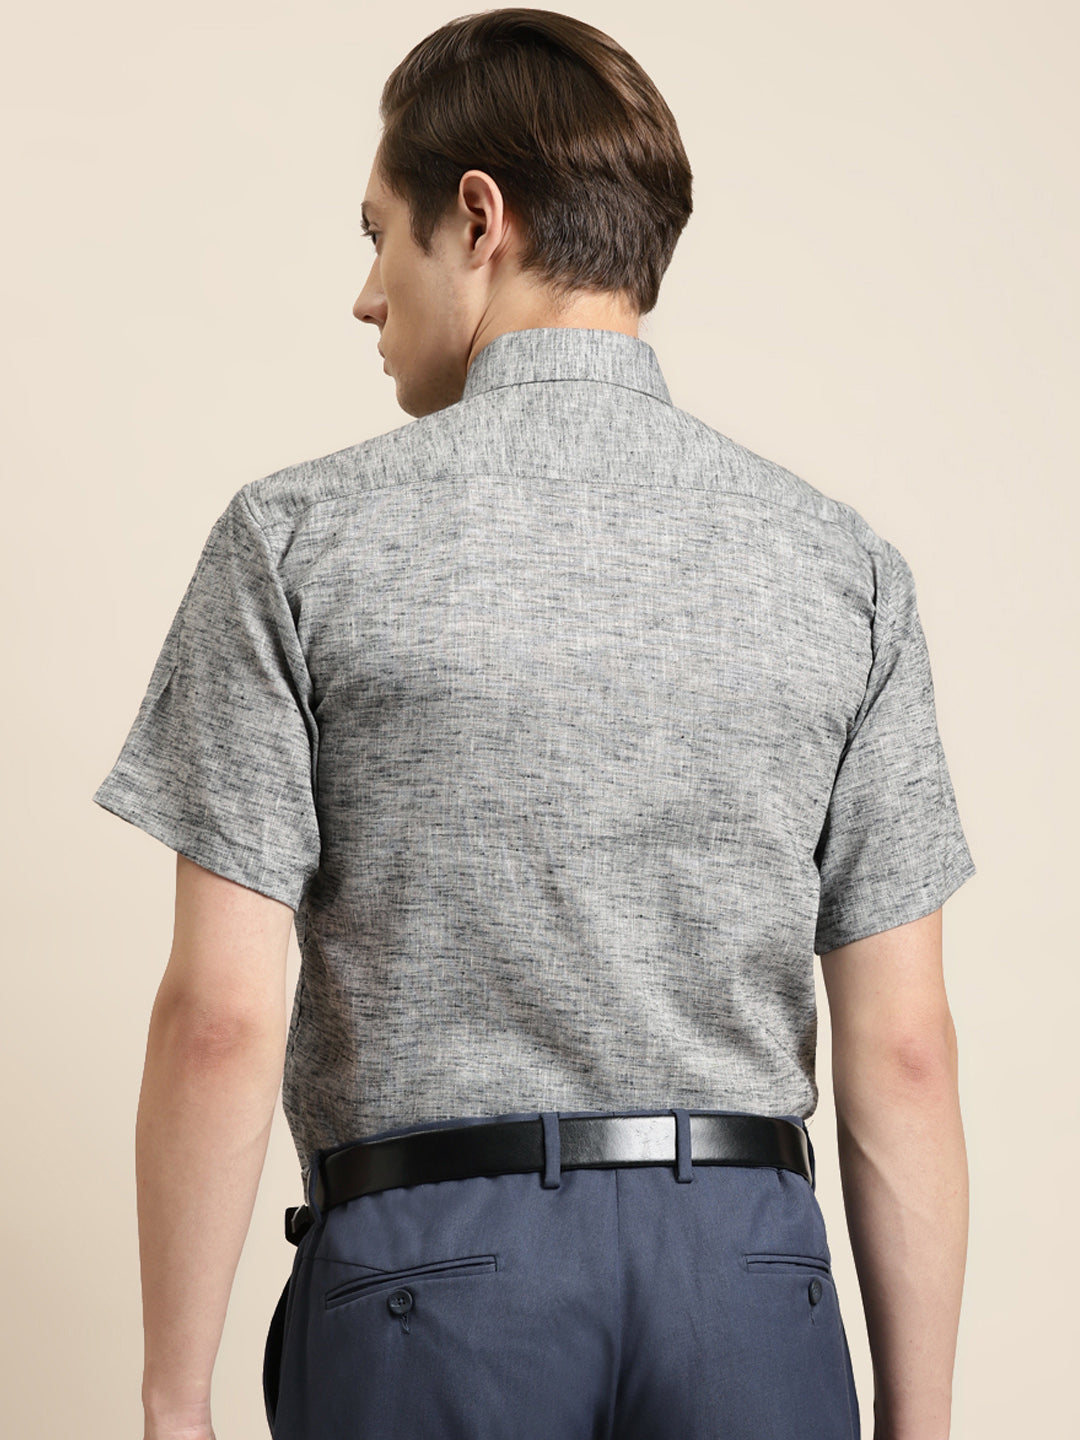 Men's Cotton Blend Grey Classic Formal Shirt - Sojanya